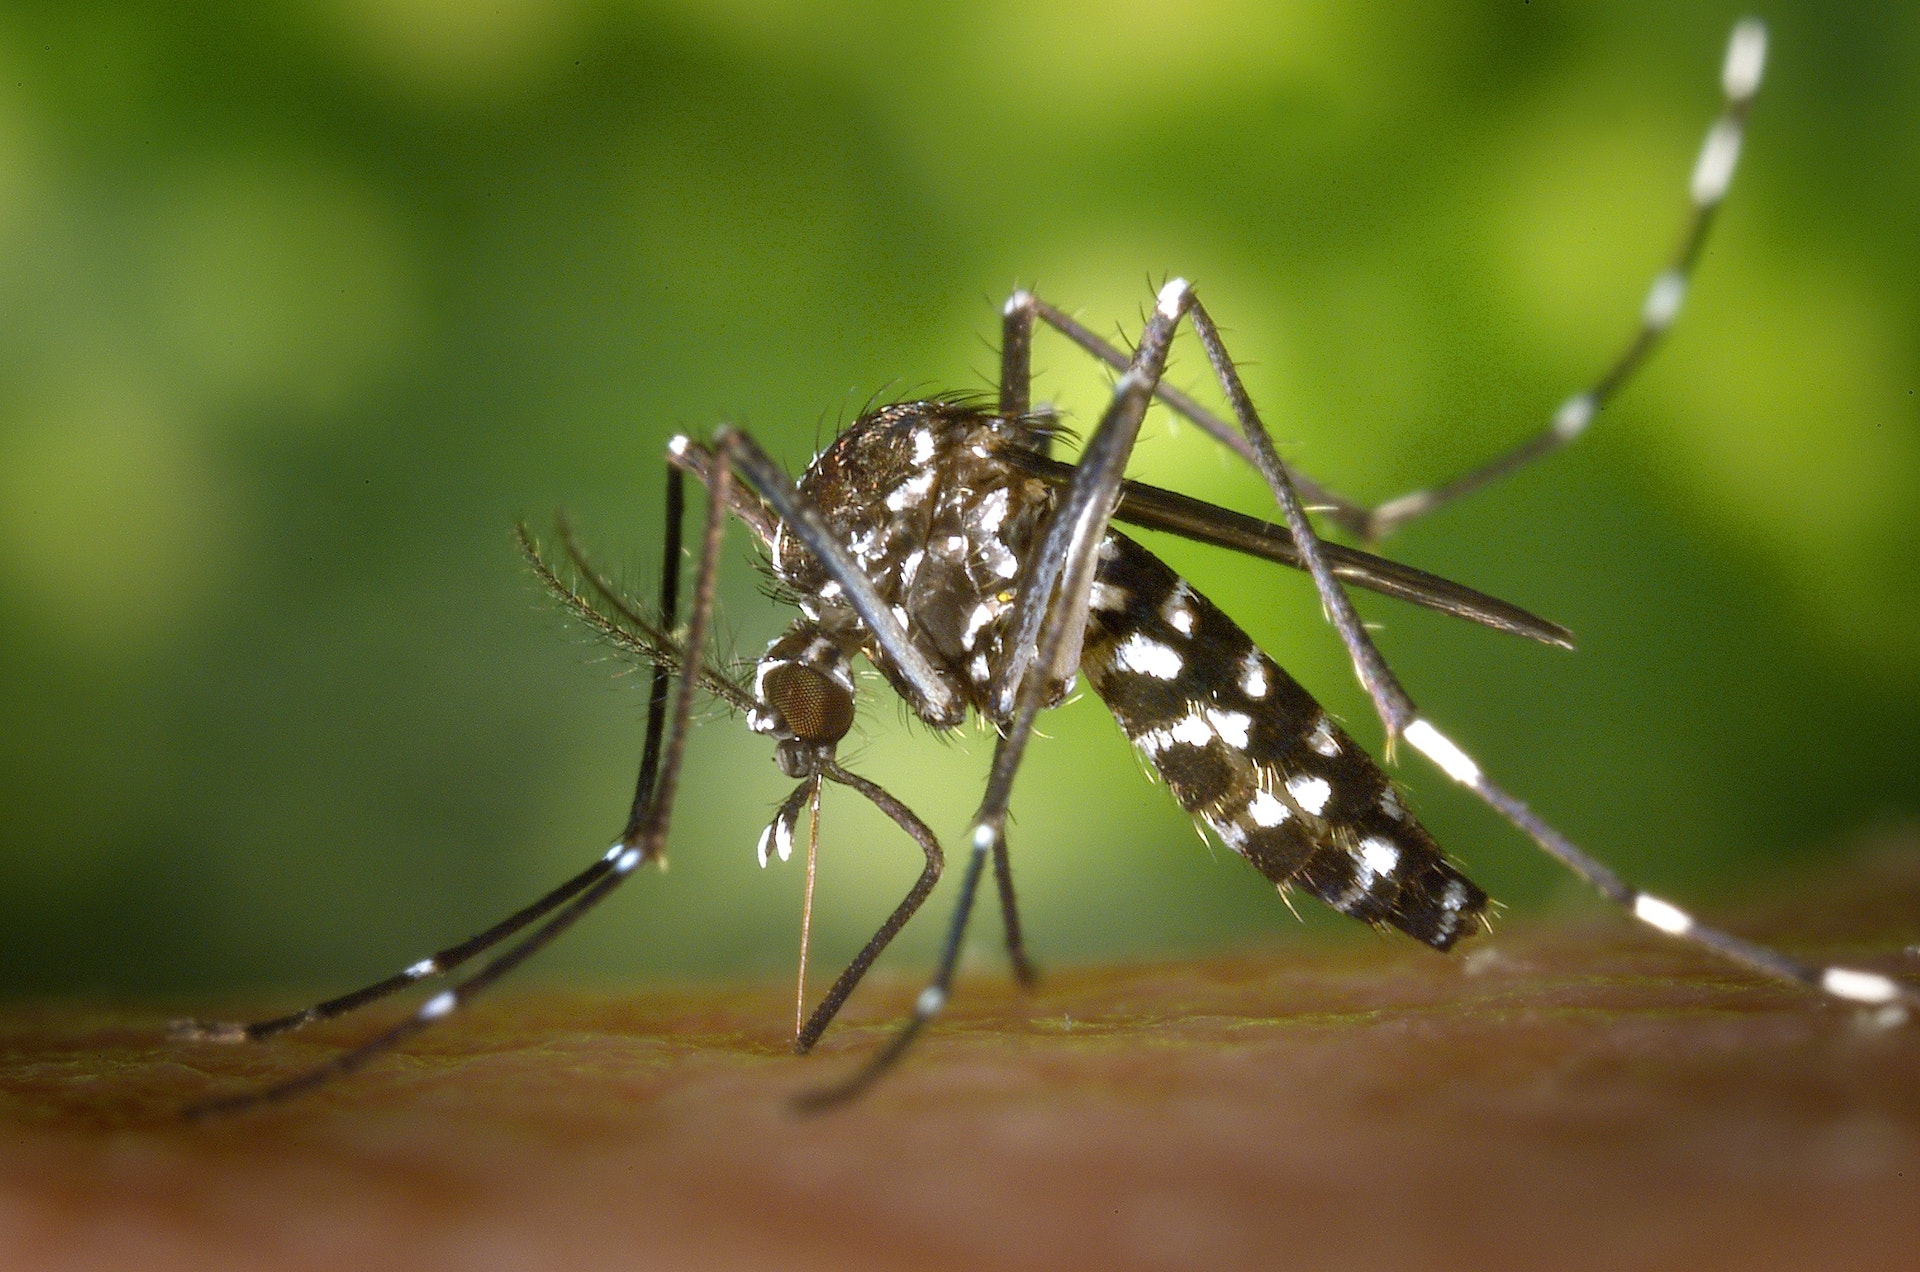 Mosquito-Borne Diseases and the Elderly